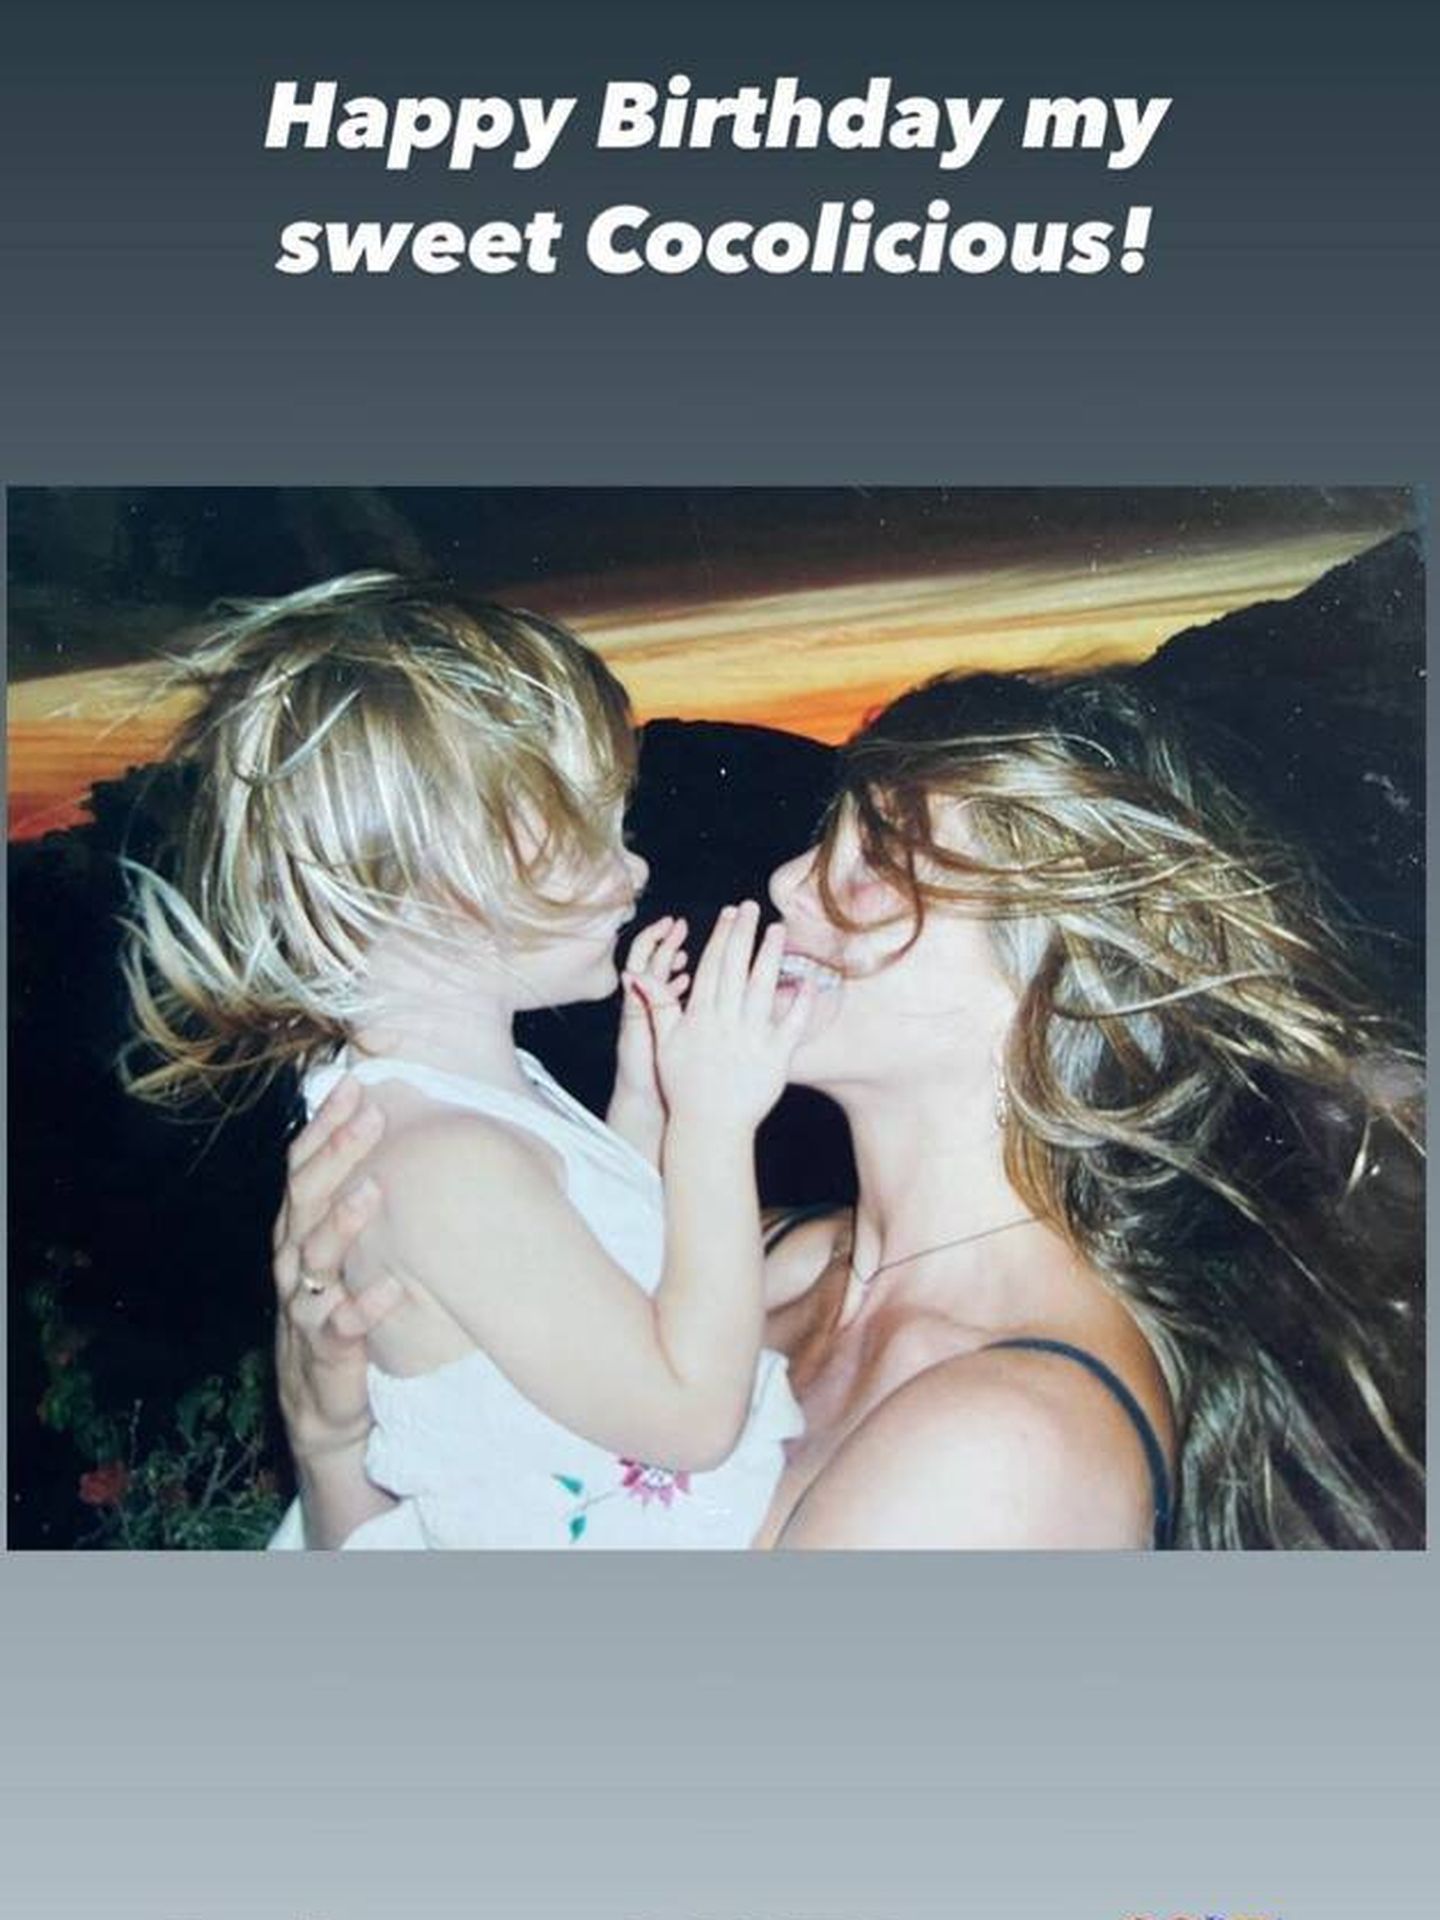 La cariñosa felicitación de Jennifer Aniston a Coco. (Instagram @jenniferaniston)